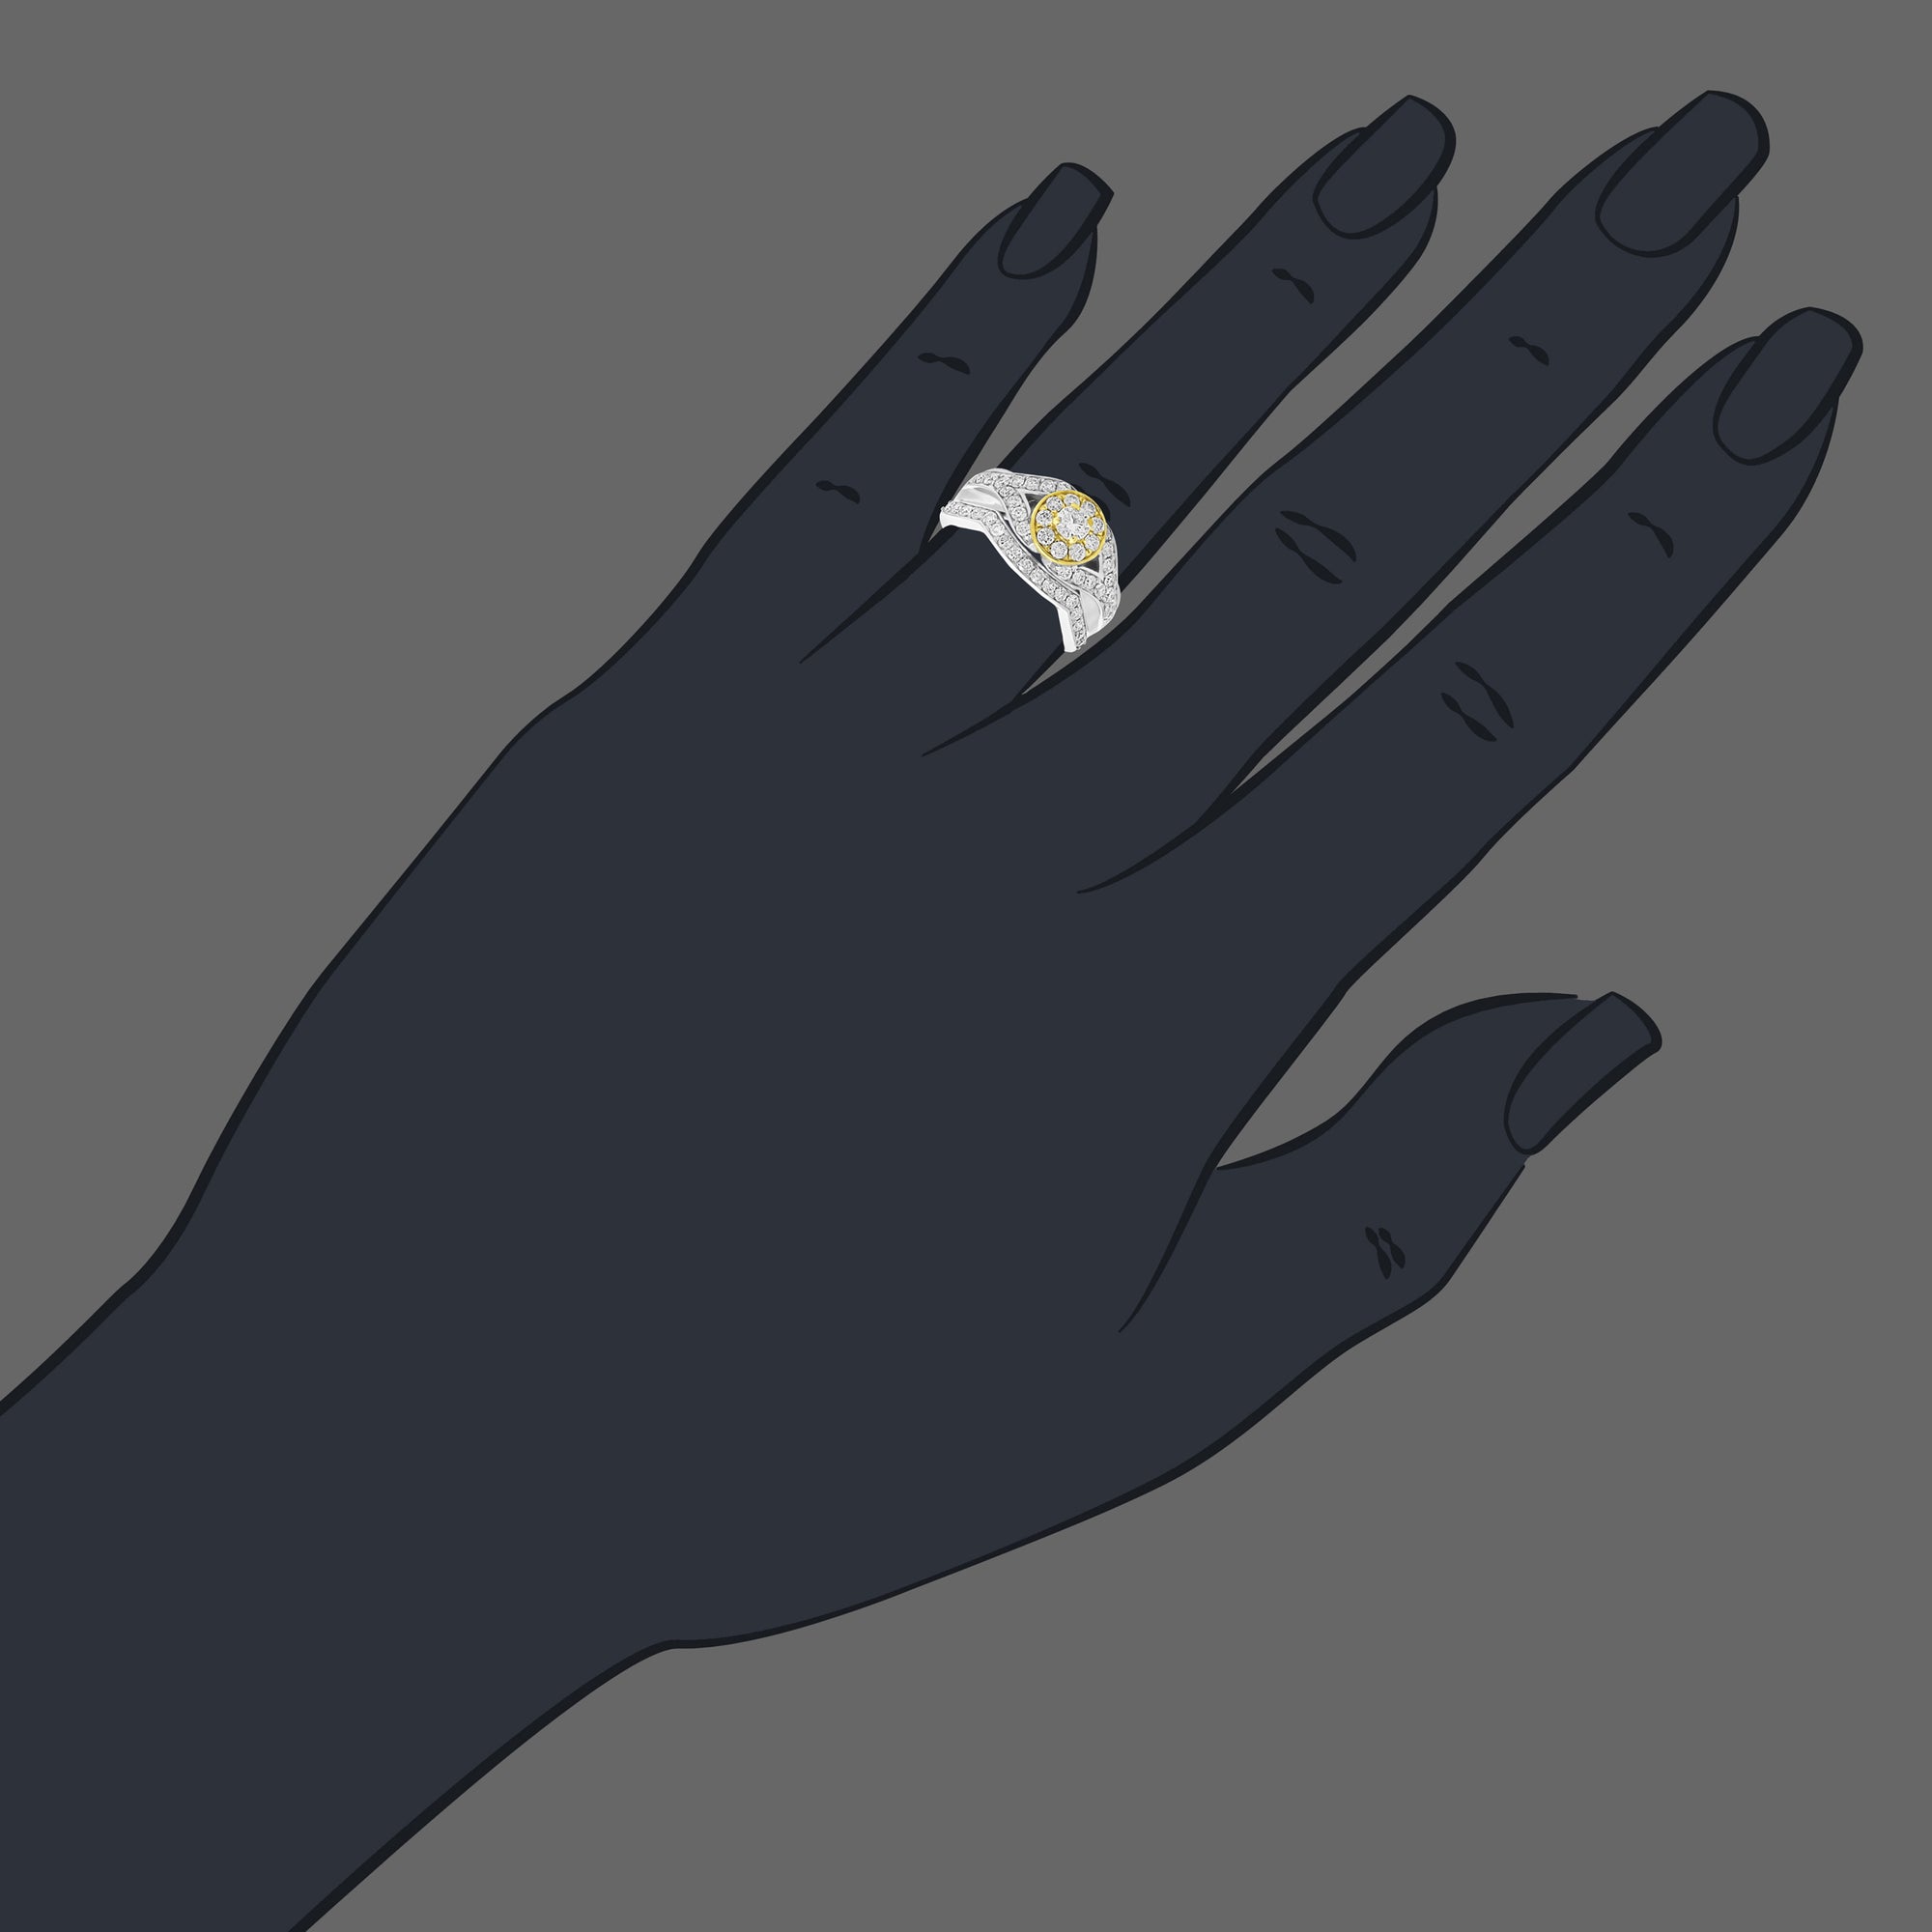 1 cttw Diamond Engagement Bridal Ring Set 14K Two Tone Gold Halo Style Wedding